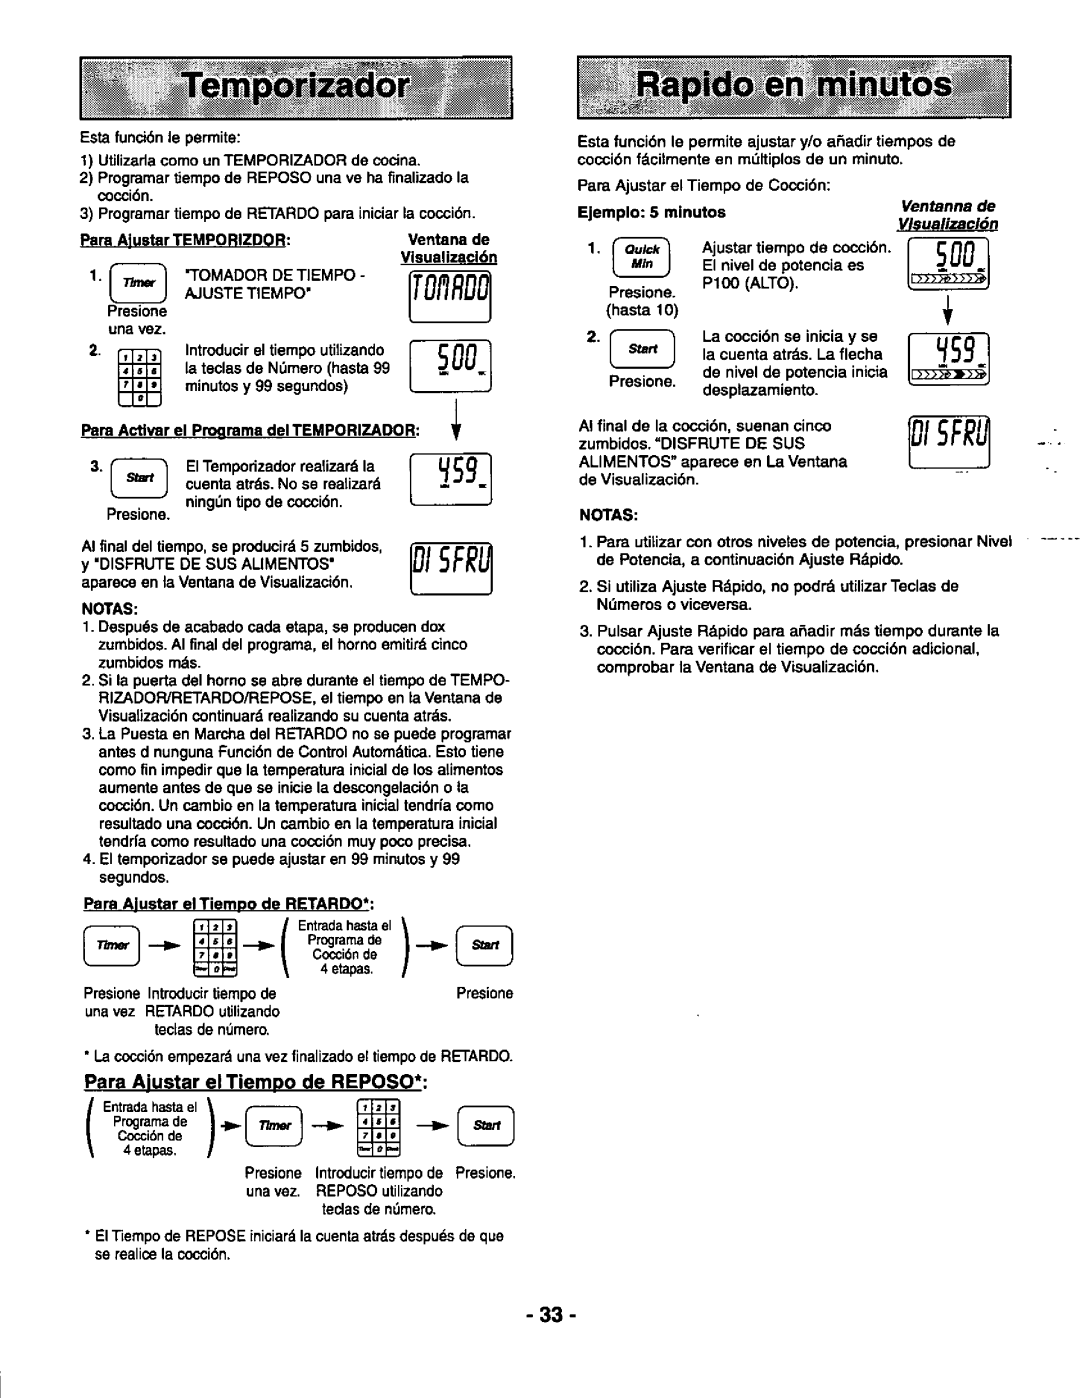 Panasonic NN-S989, NN-S789 manual 